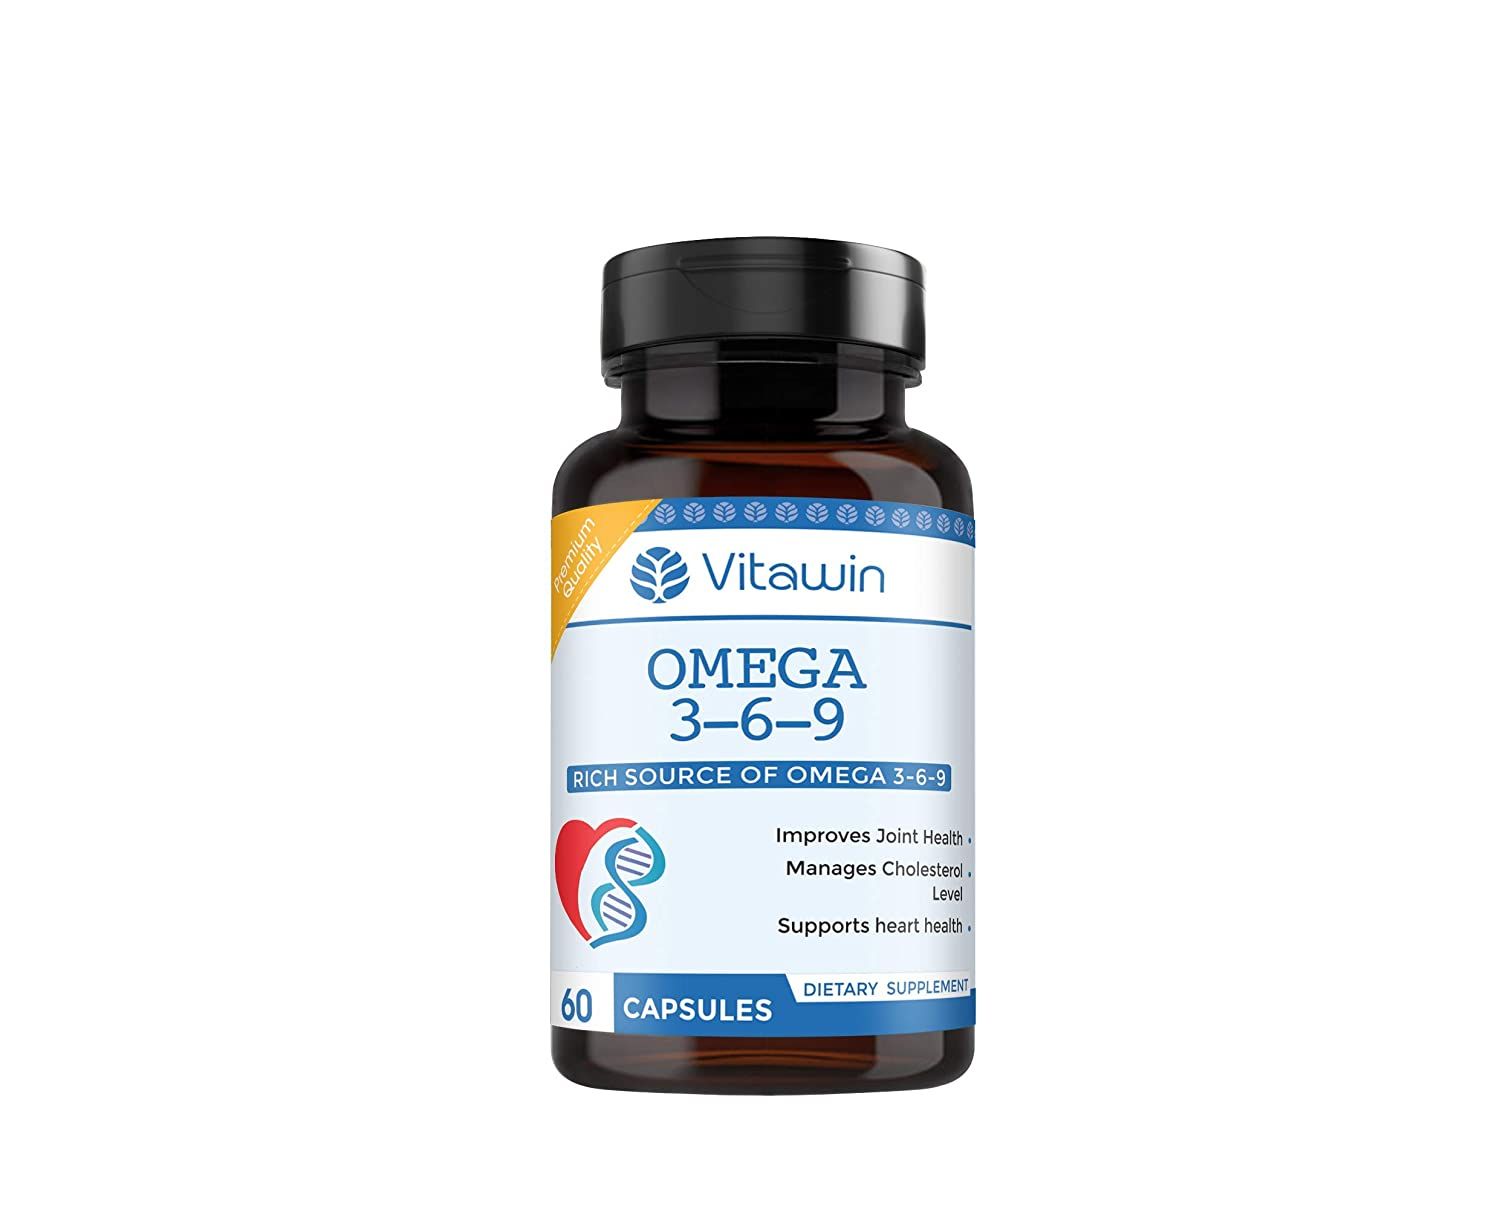 Vitawin Omega 3-6-9 Capsules Image